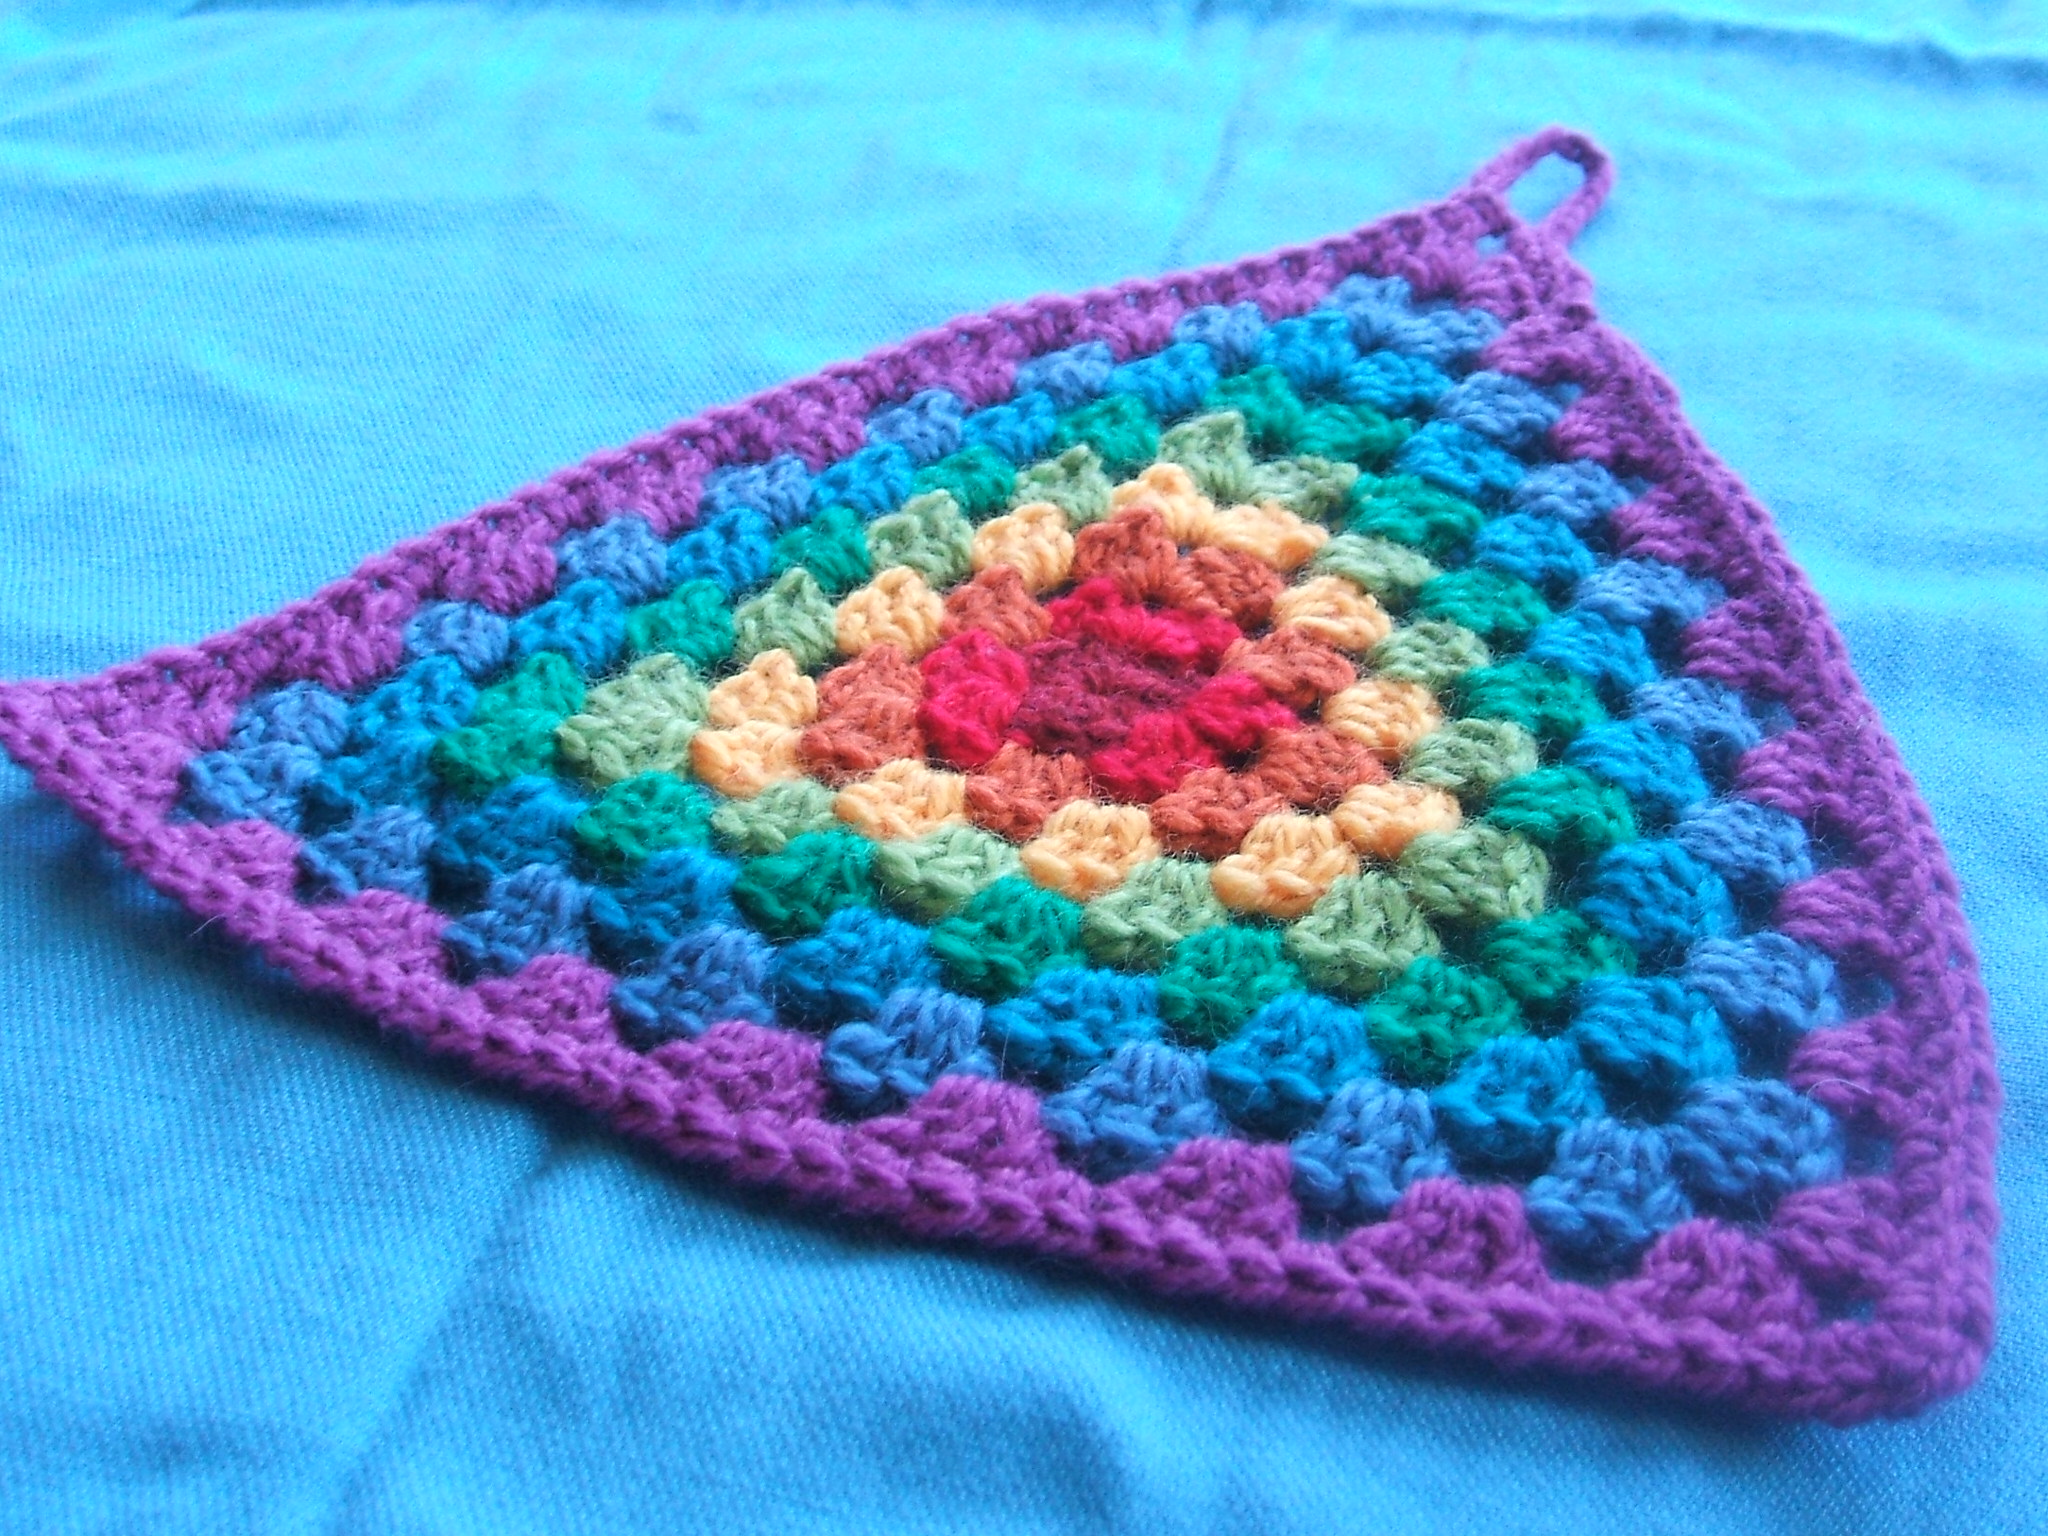 TRIANGLE DOILY Crochet Pattern - Free Crochet Pattern Courtesy of